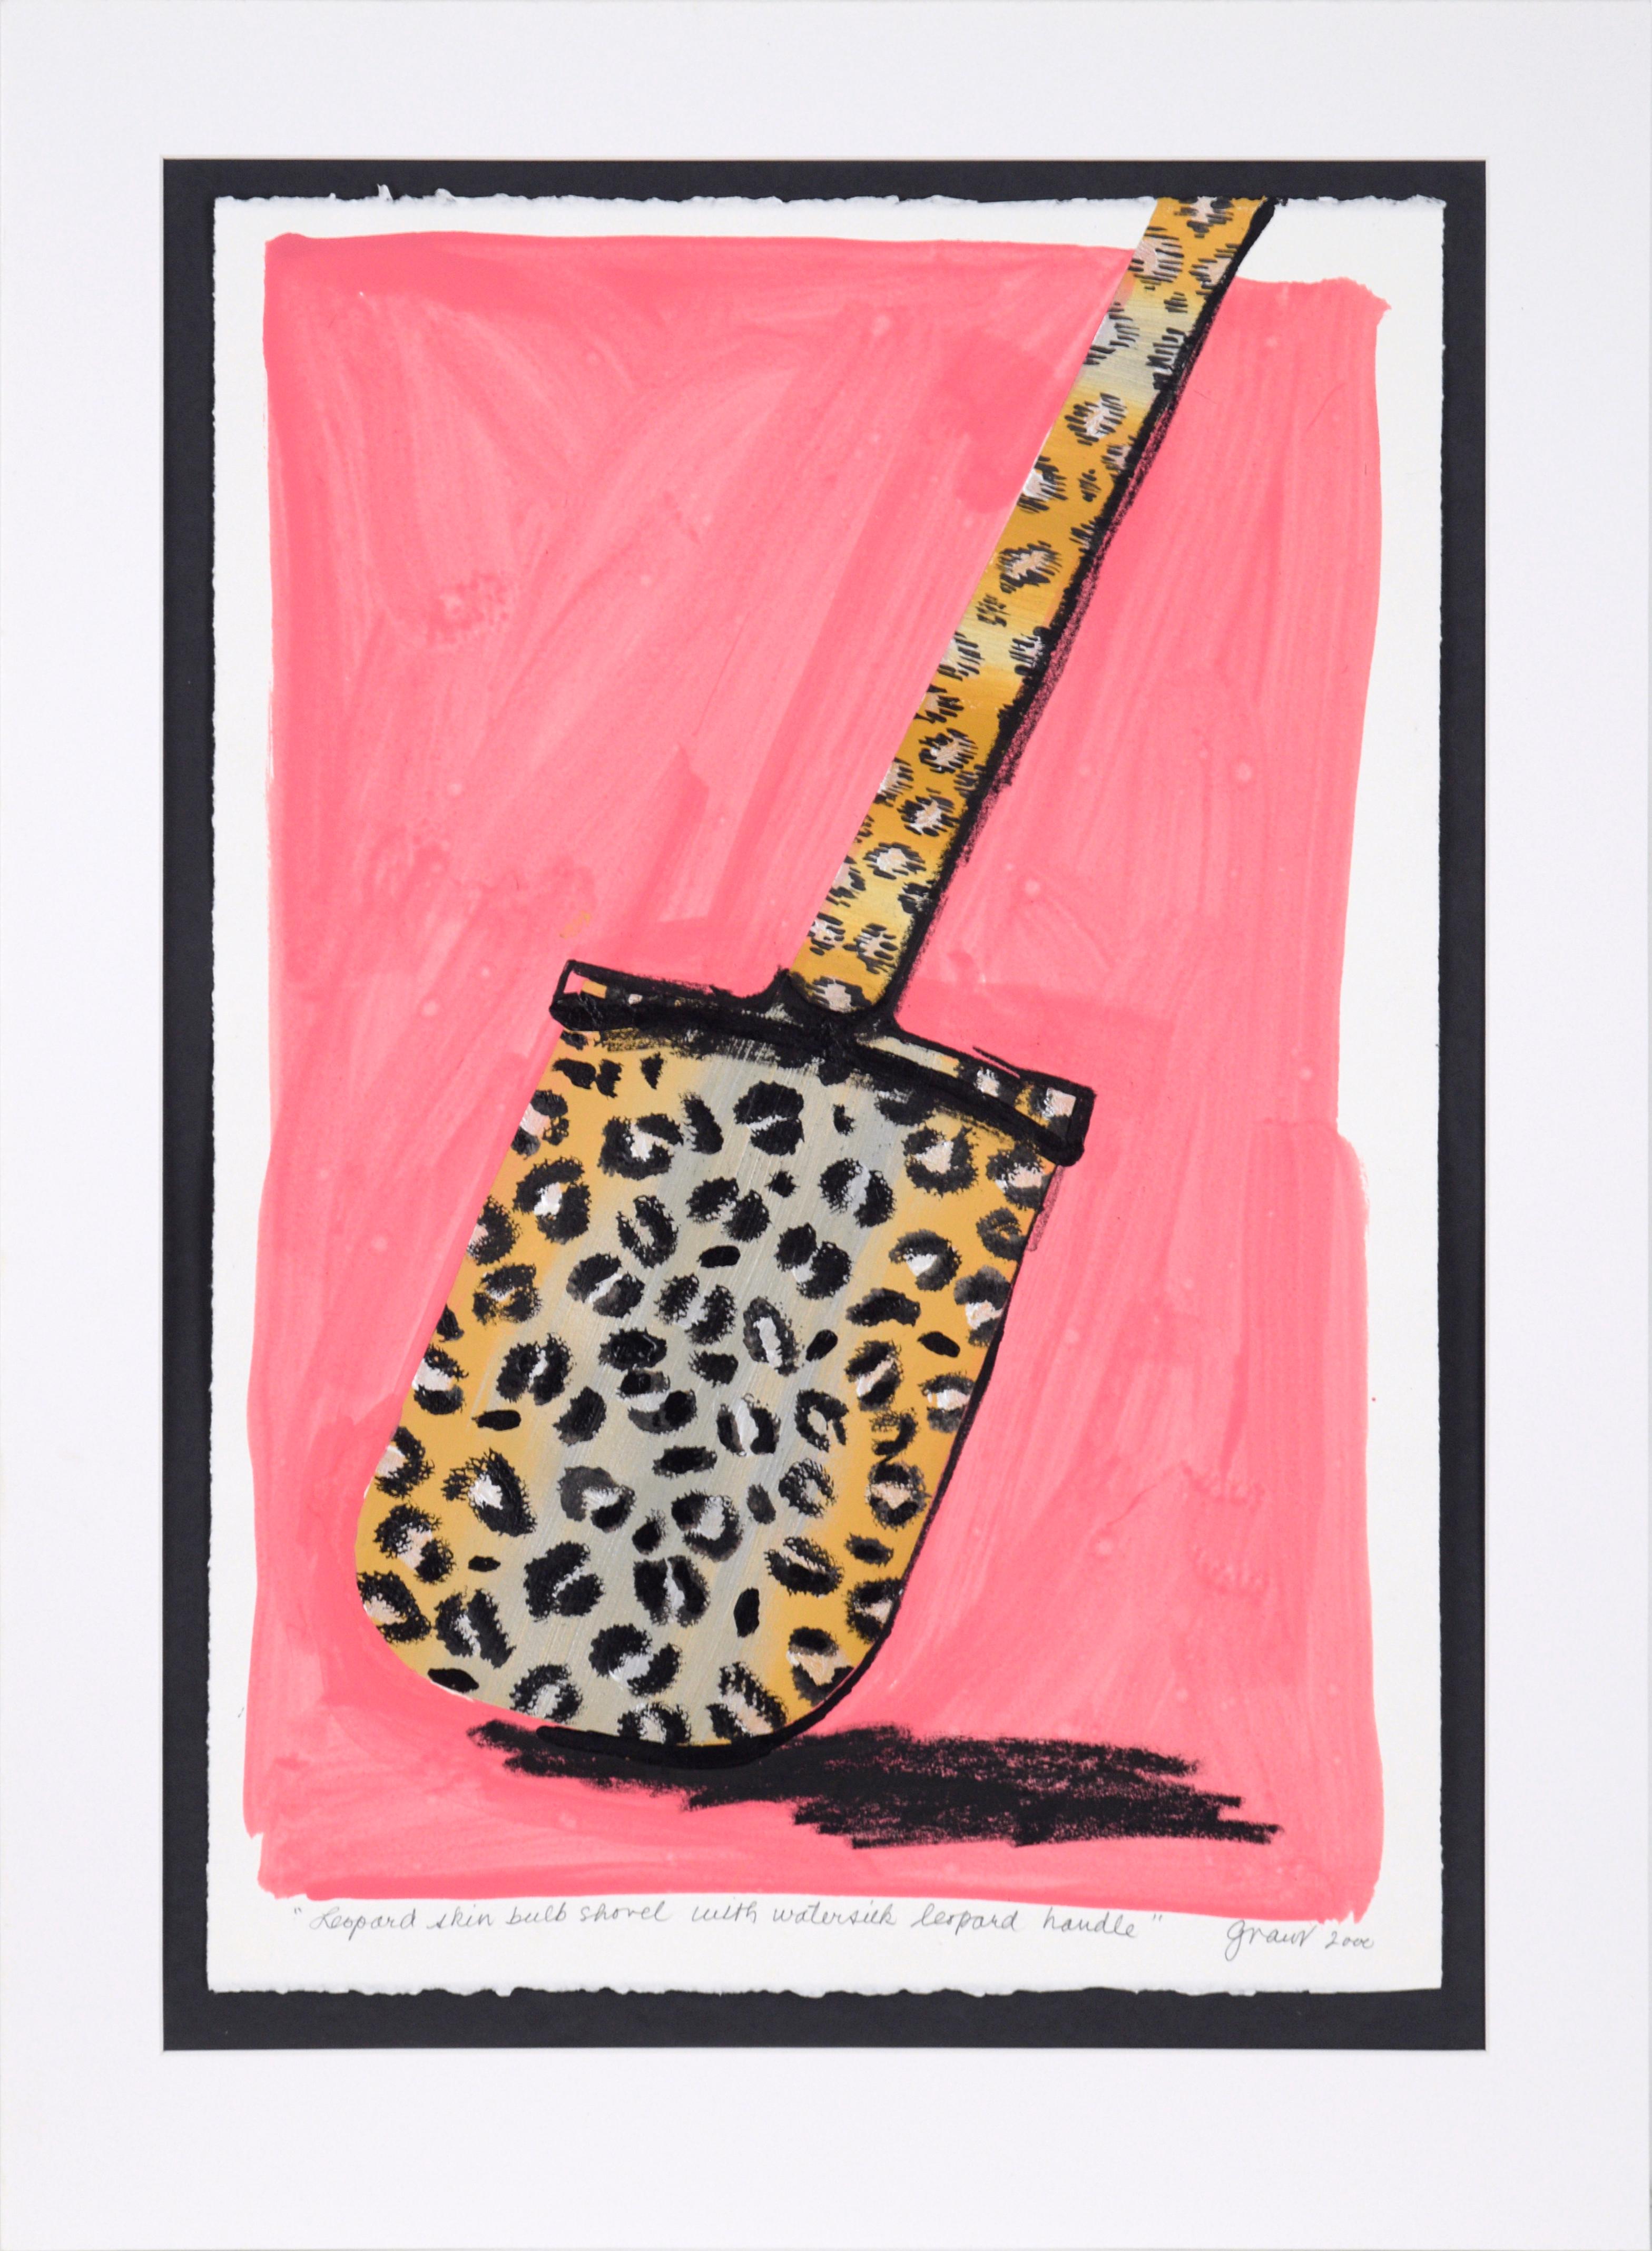 Marc Foster Grant Still-Life Painting - "Leopard Skin Bulb Shovel with Watersilk Leopard Handle" - Pop Art